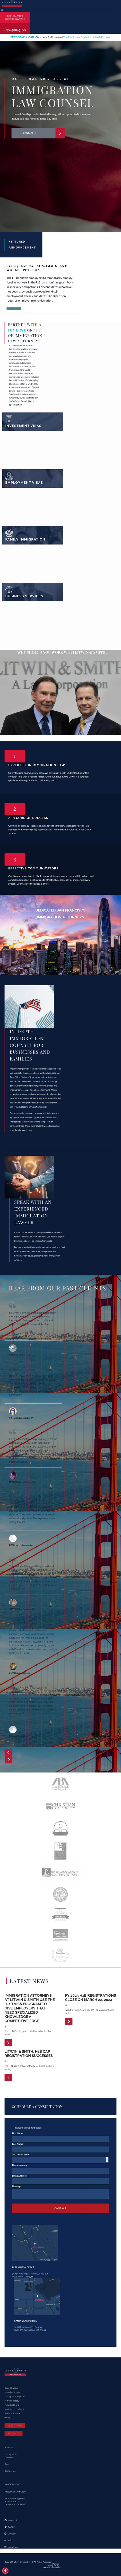 Litwin & Associates, A Law Corporation - San Francisco CA Lawyers